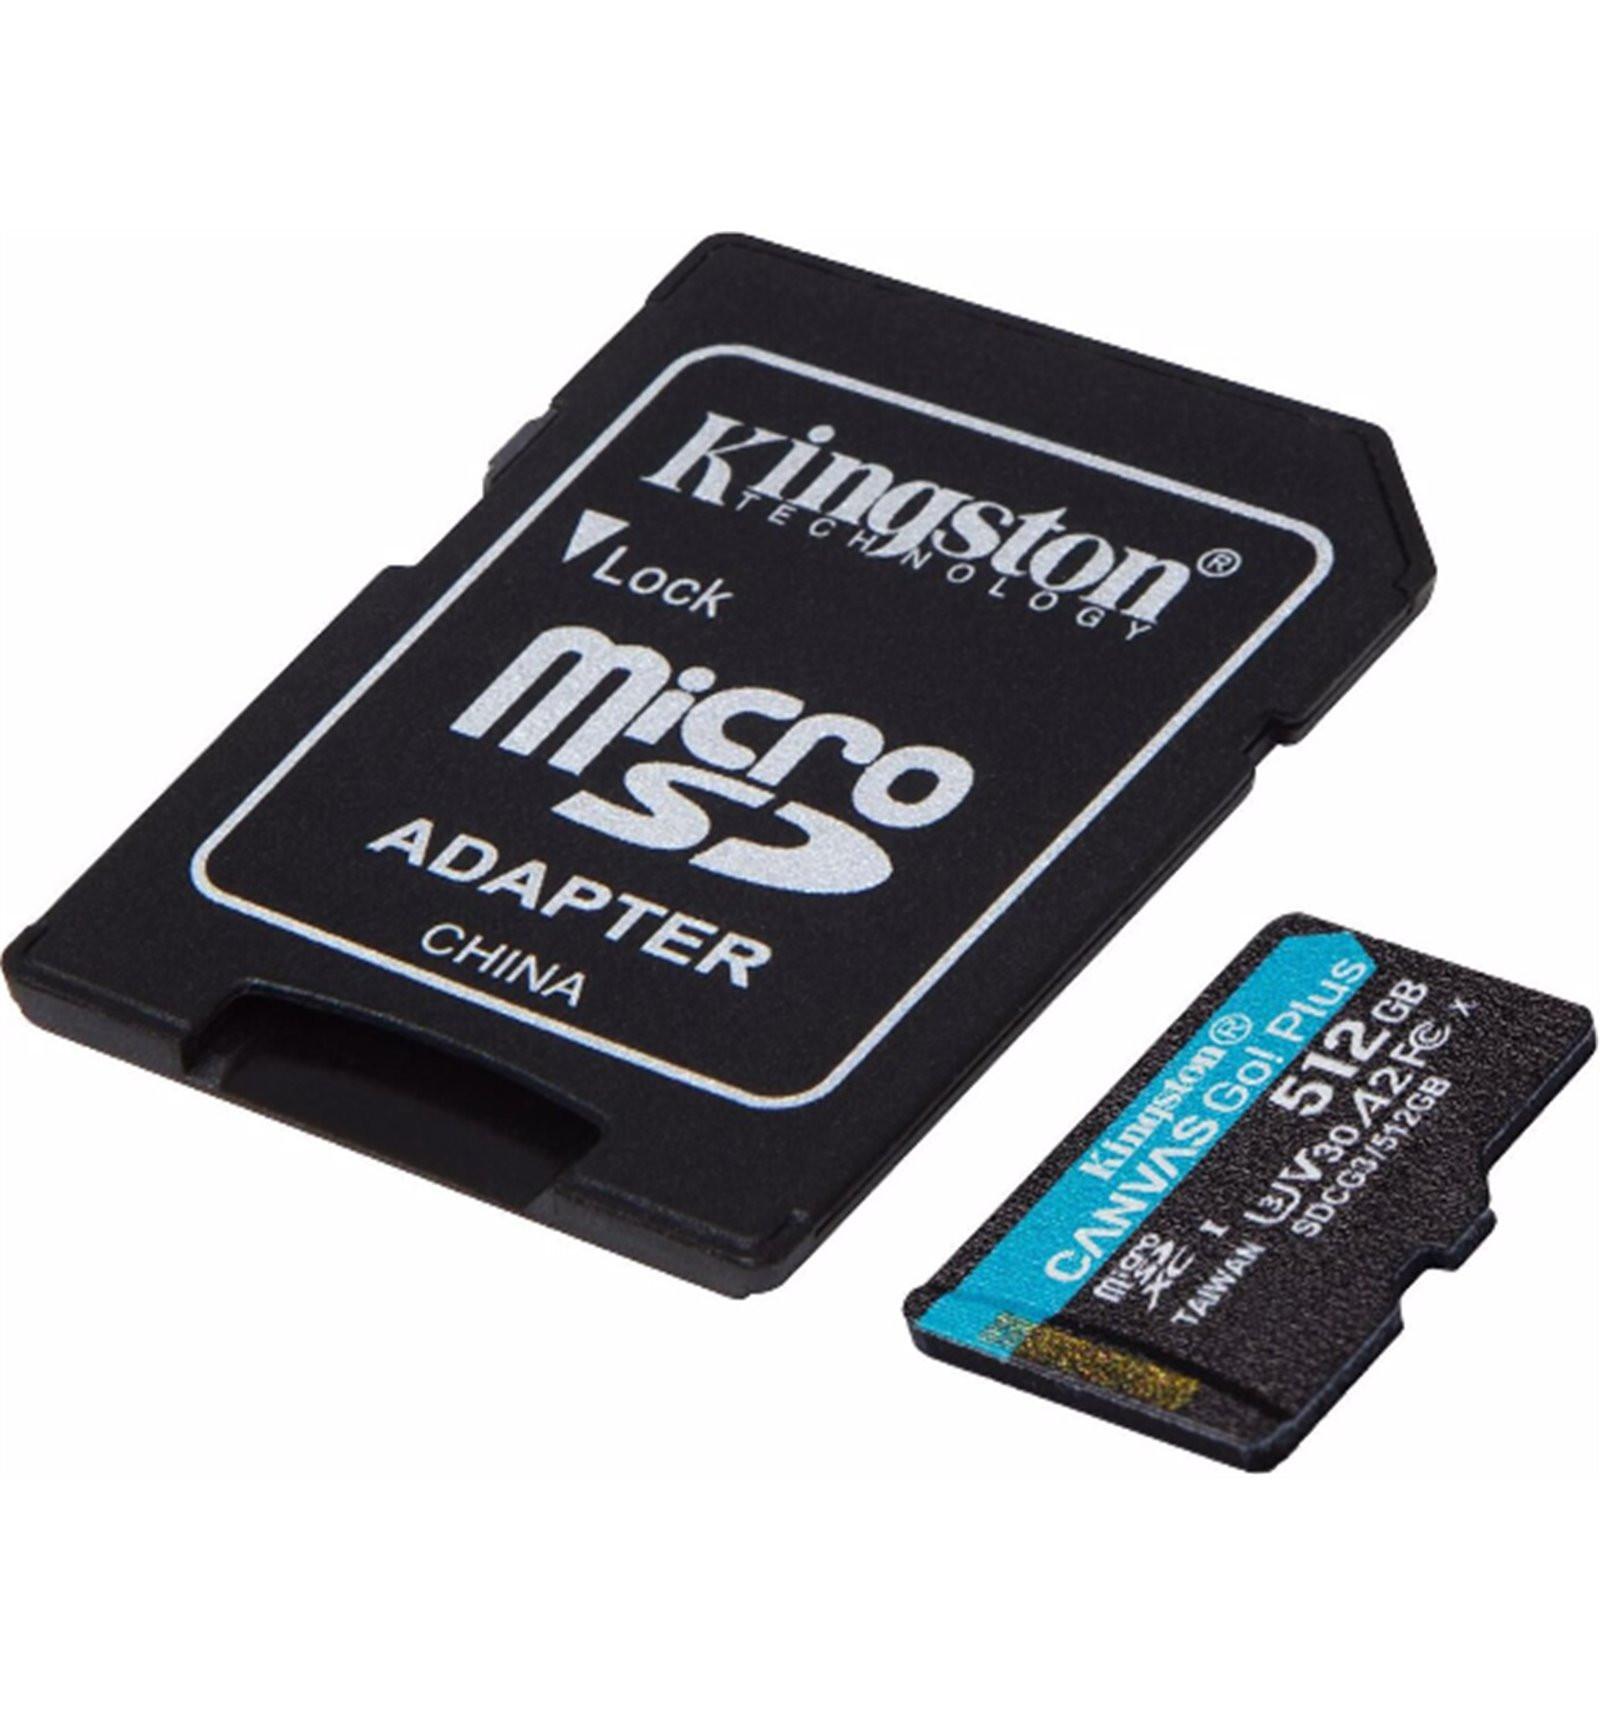 Kingston  Kingston Technology Scheda microSDXC Canvas Go Plus 170R A2 U3 V30 da 512GB + adattatore 